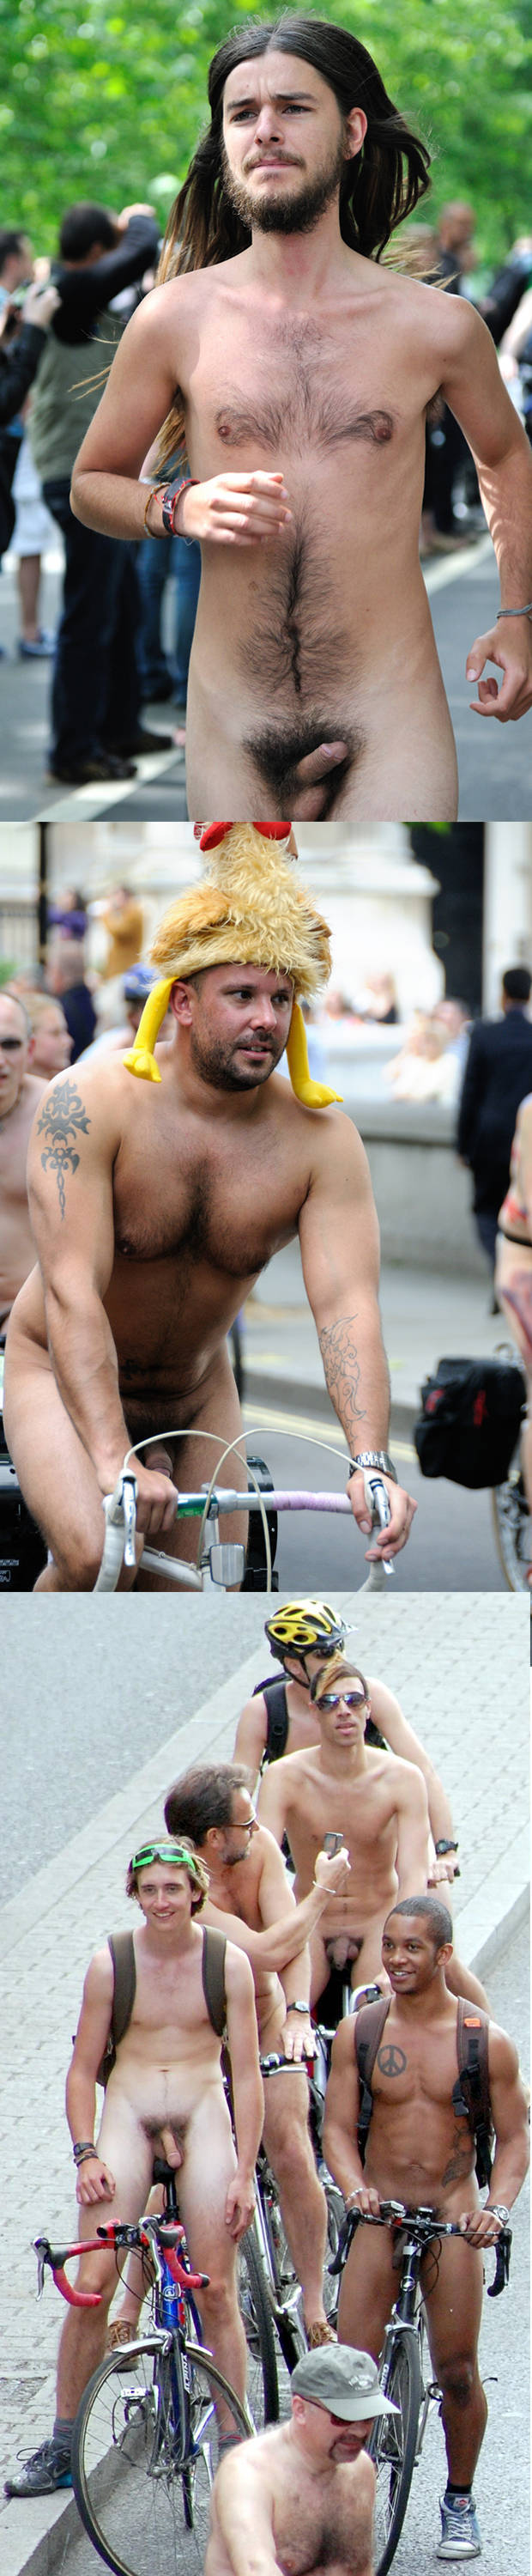 eric deman naked men in public bike ride